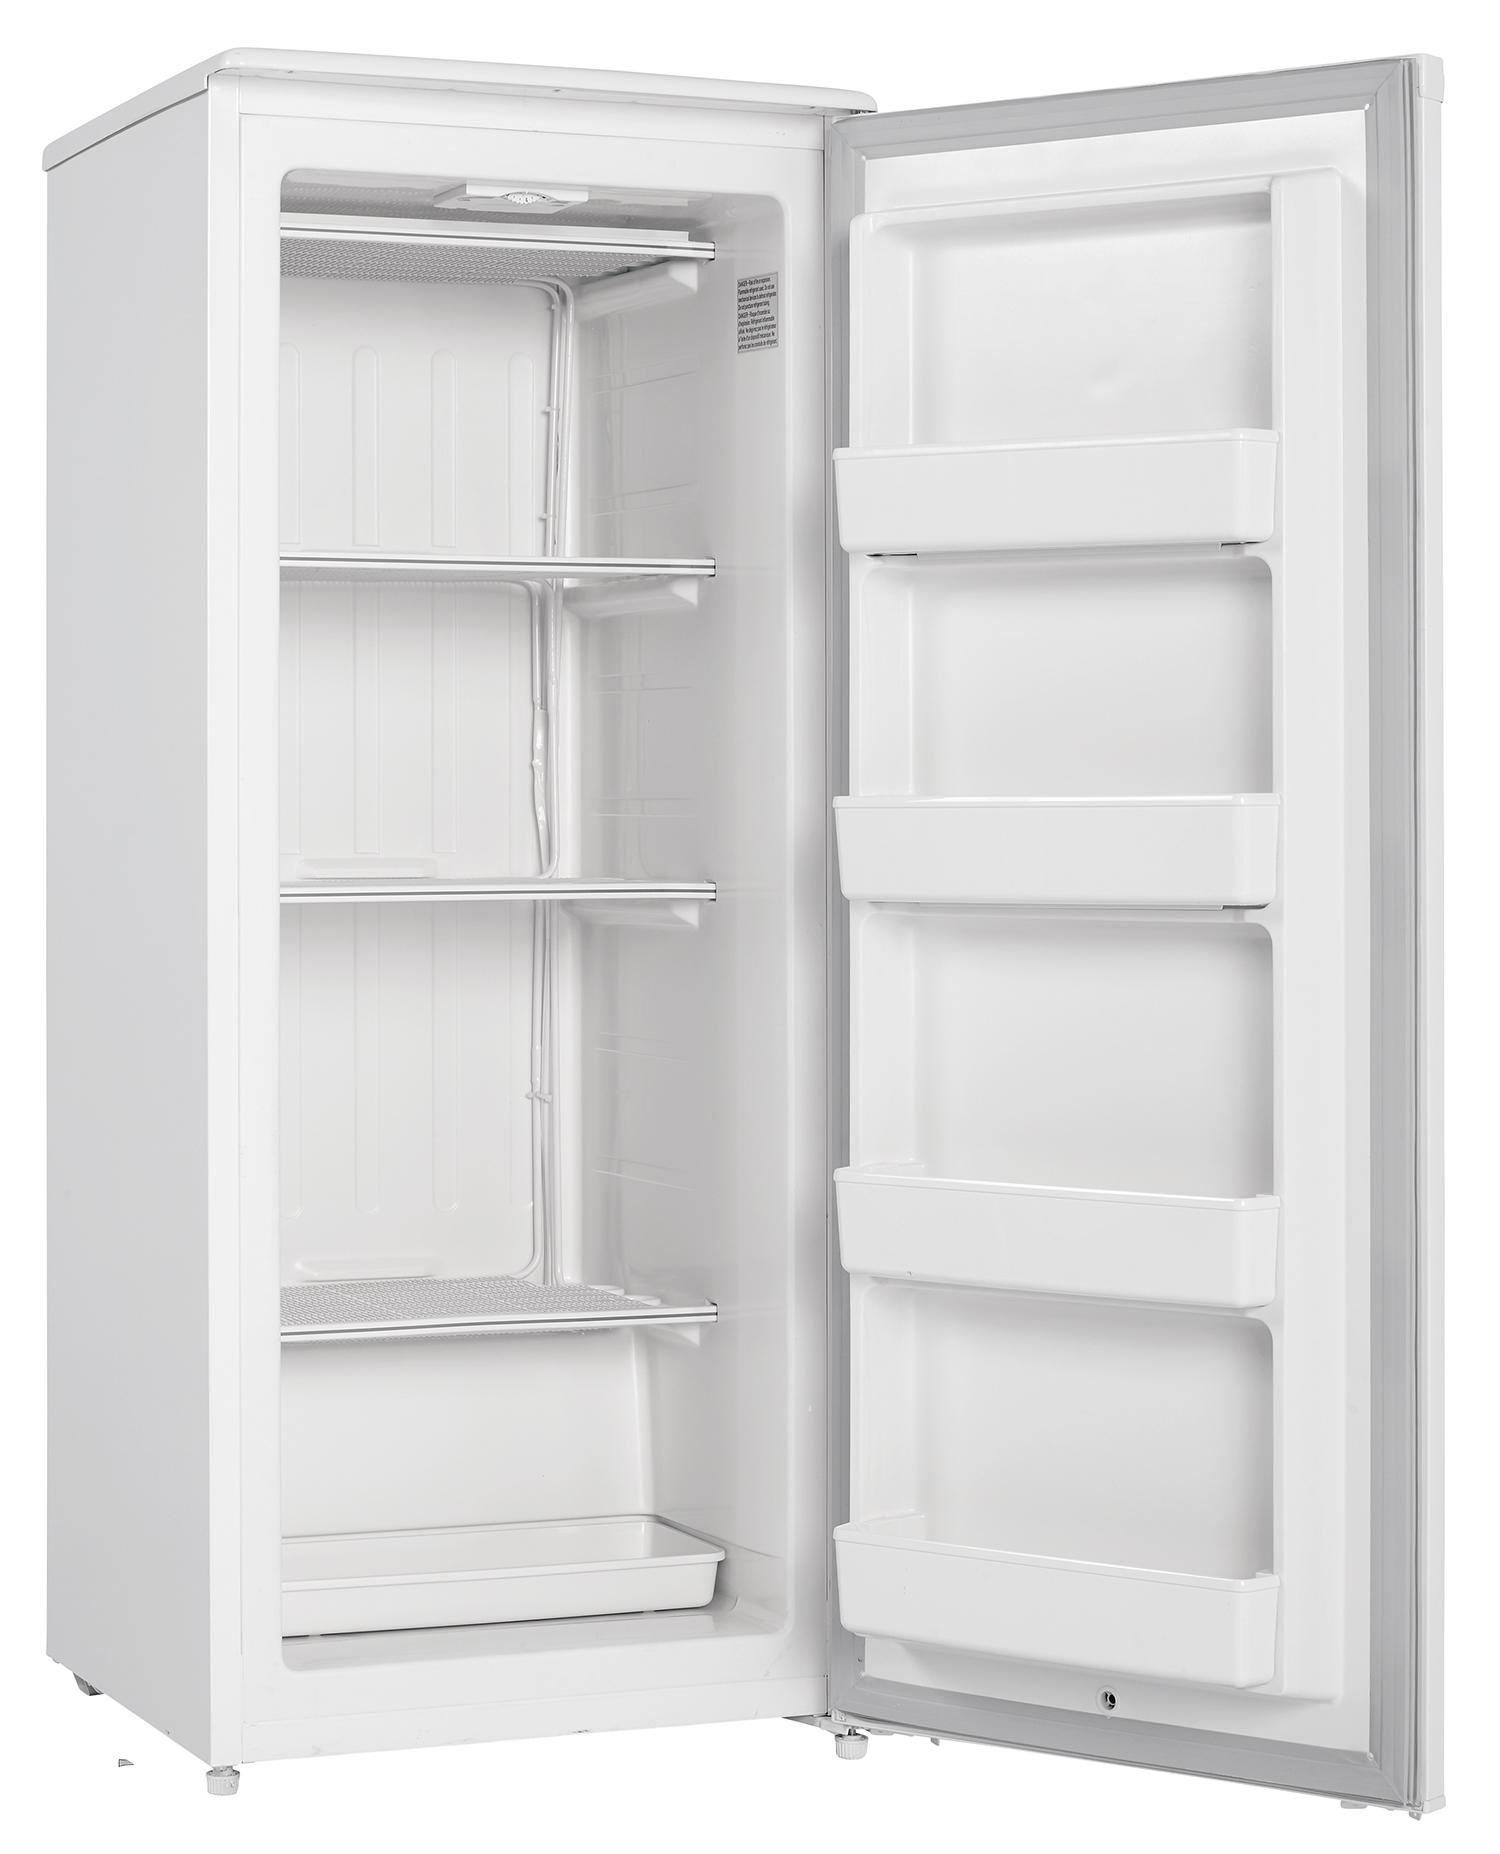 Danby Designer 8.5 cu. ft. Upright Freezer in White